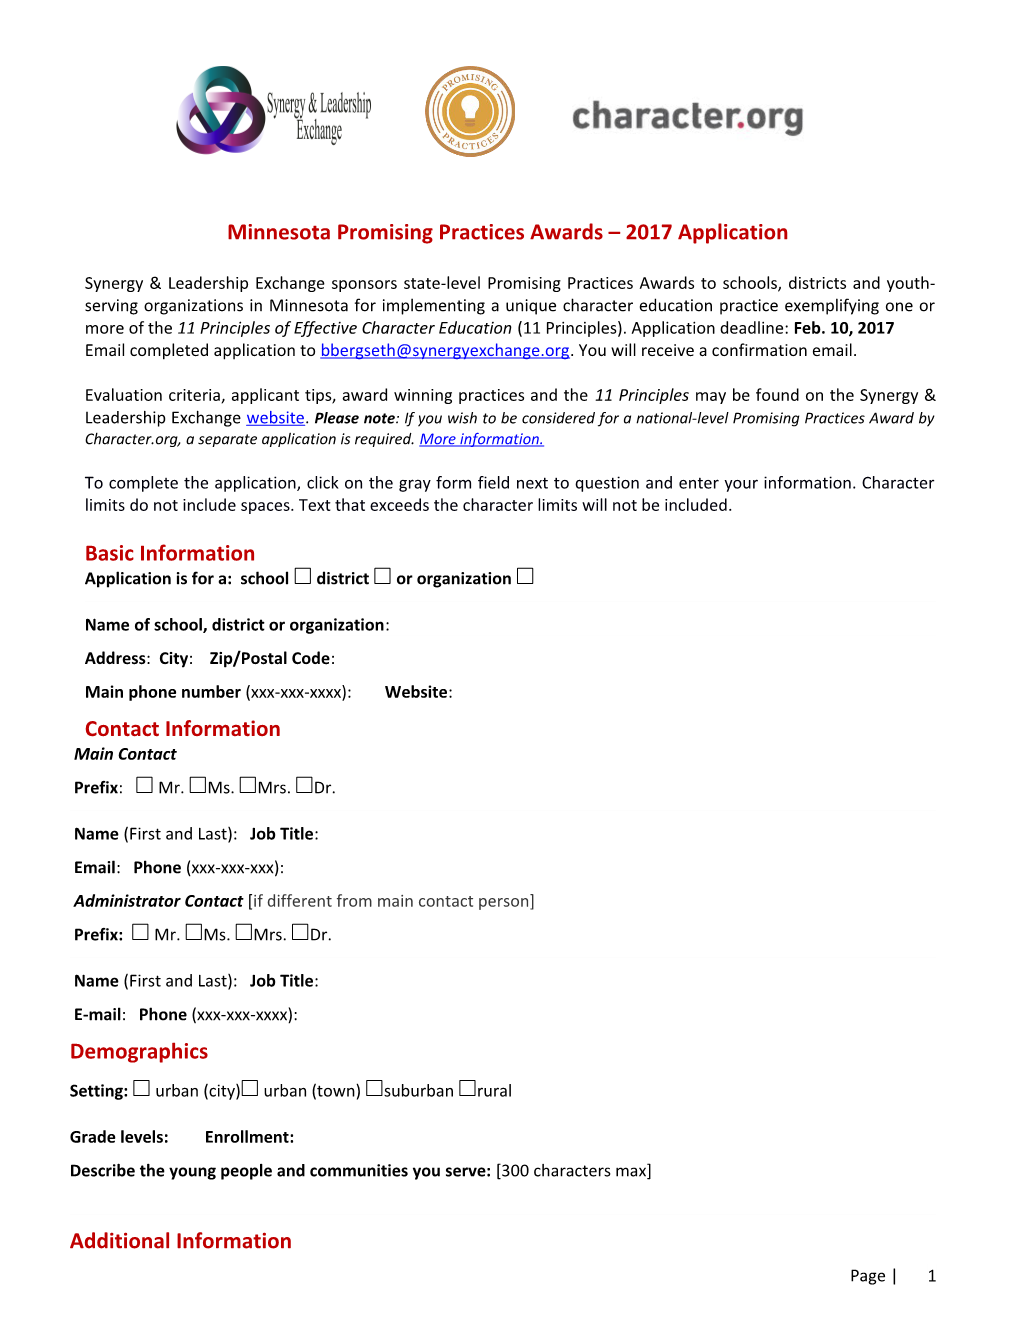 Minnesota Promising Practices Awards 2017 Application